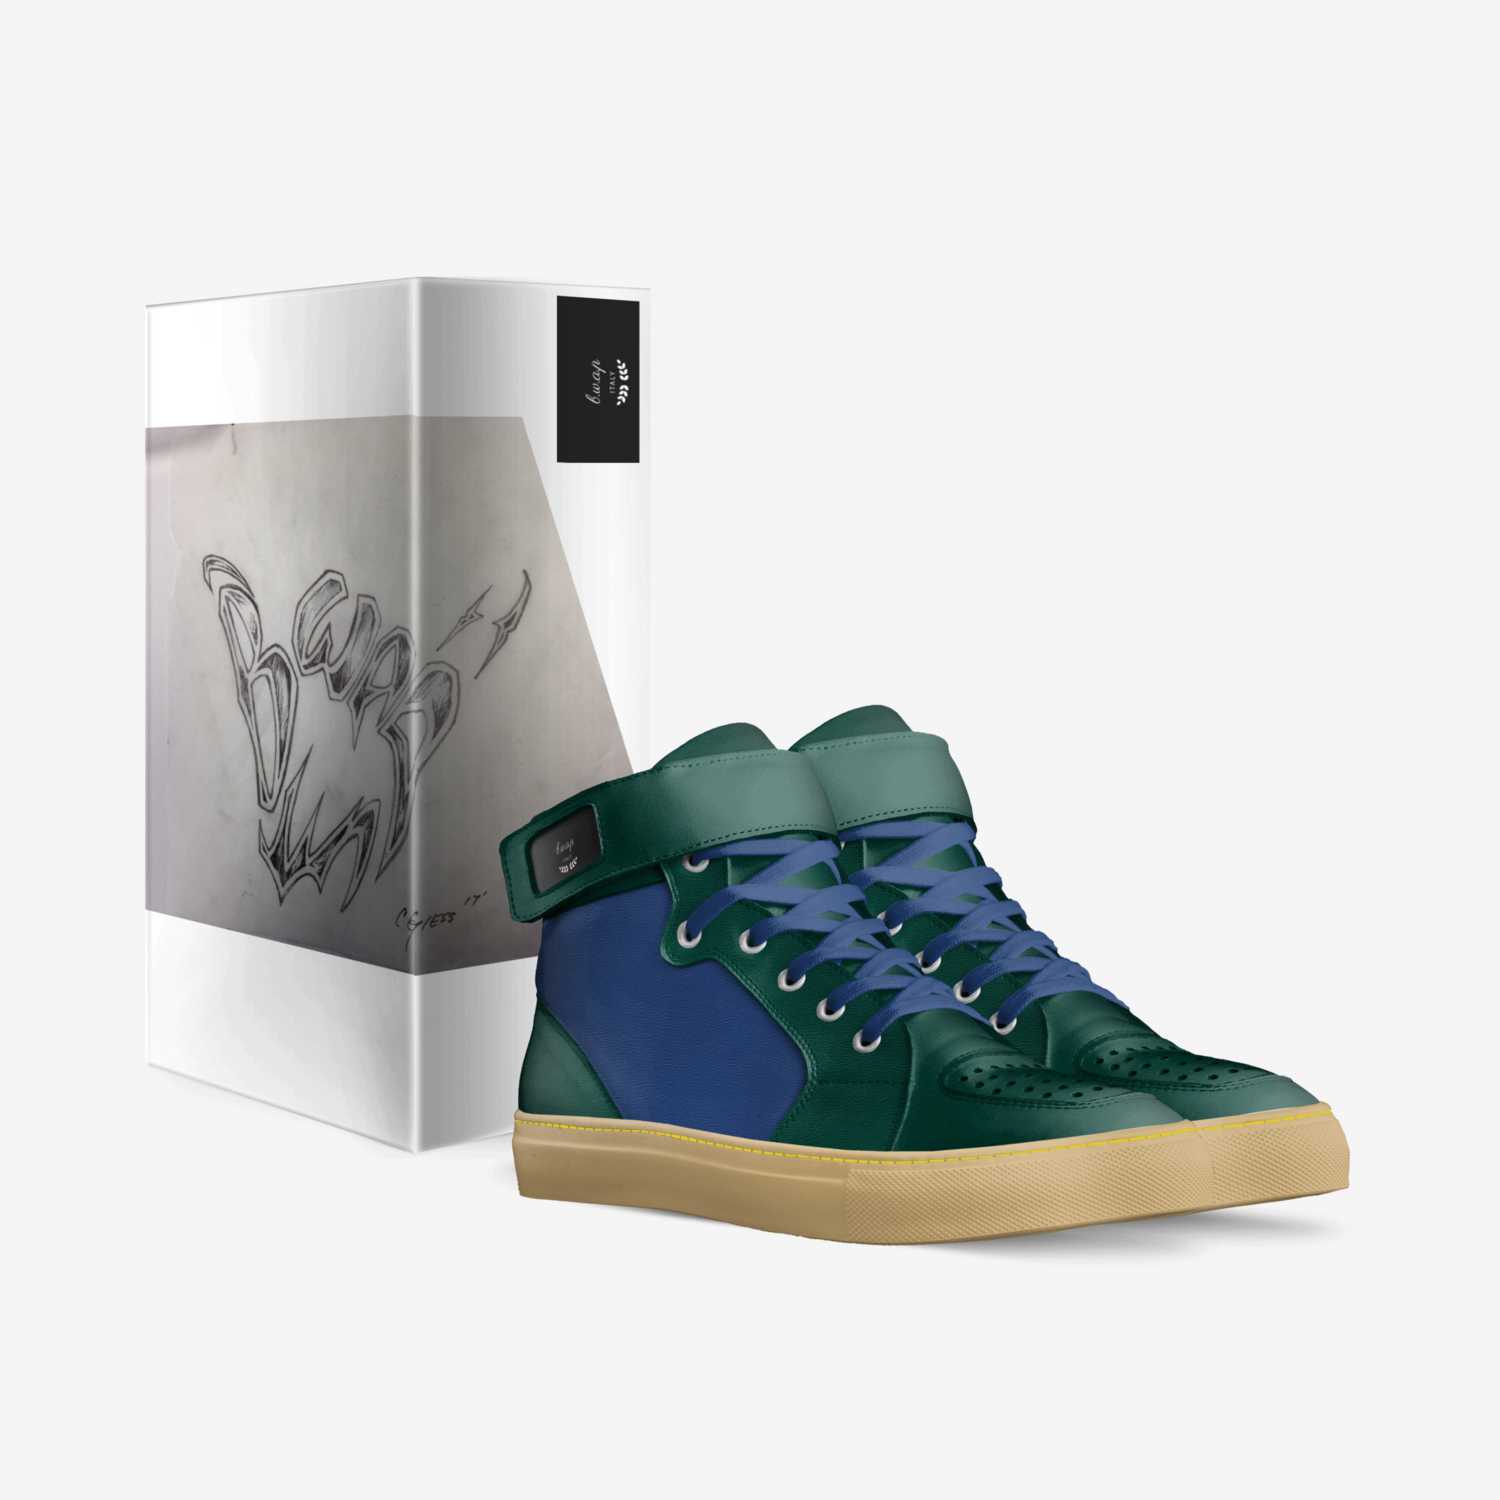 b.w.a.p custom made in Italy shoes by Shuuz B.w.a.p | Box view